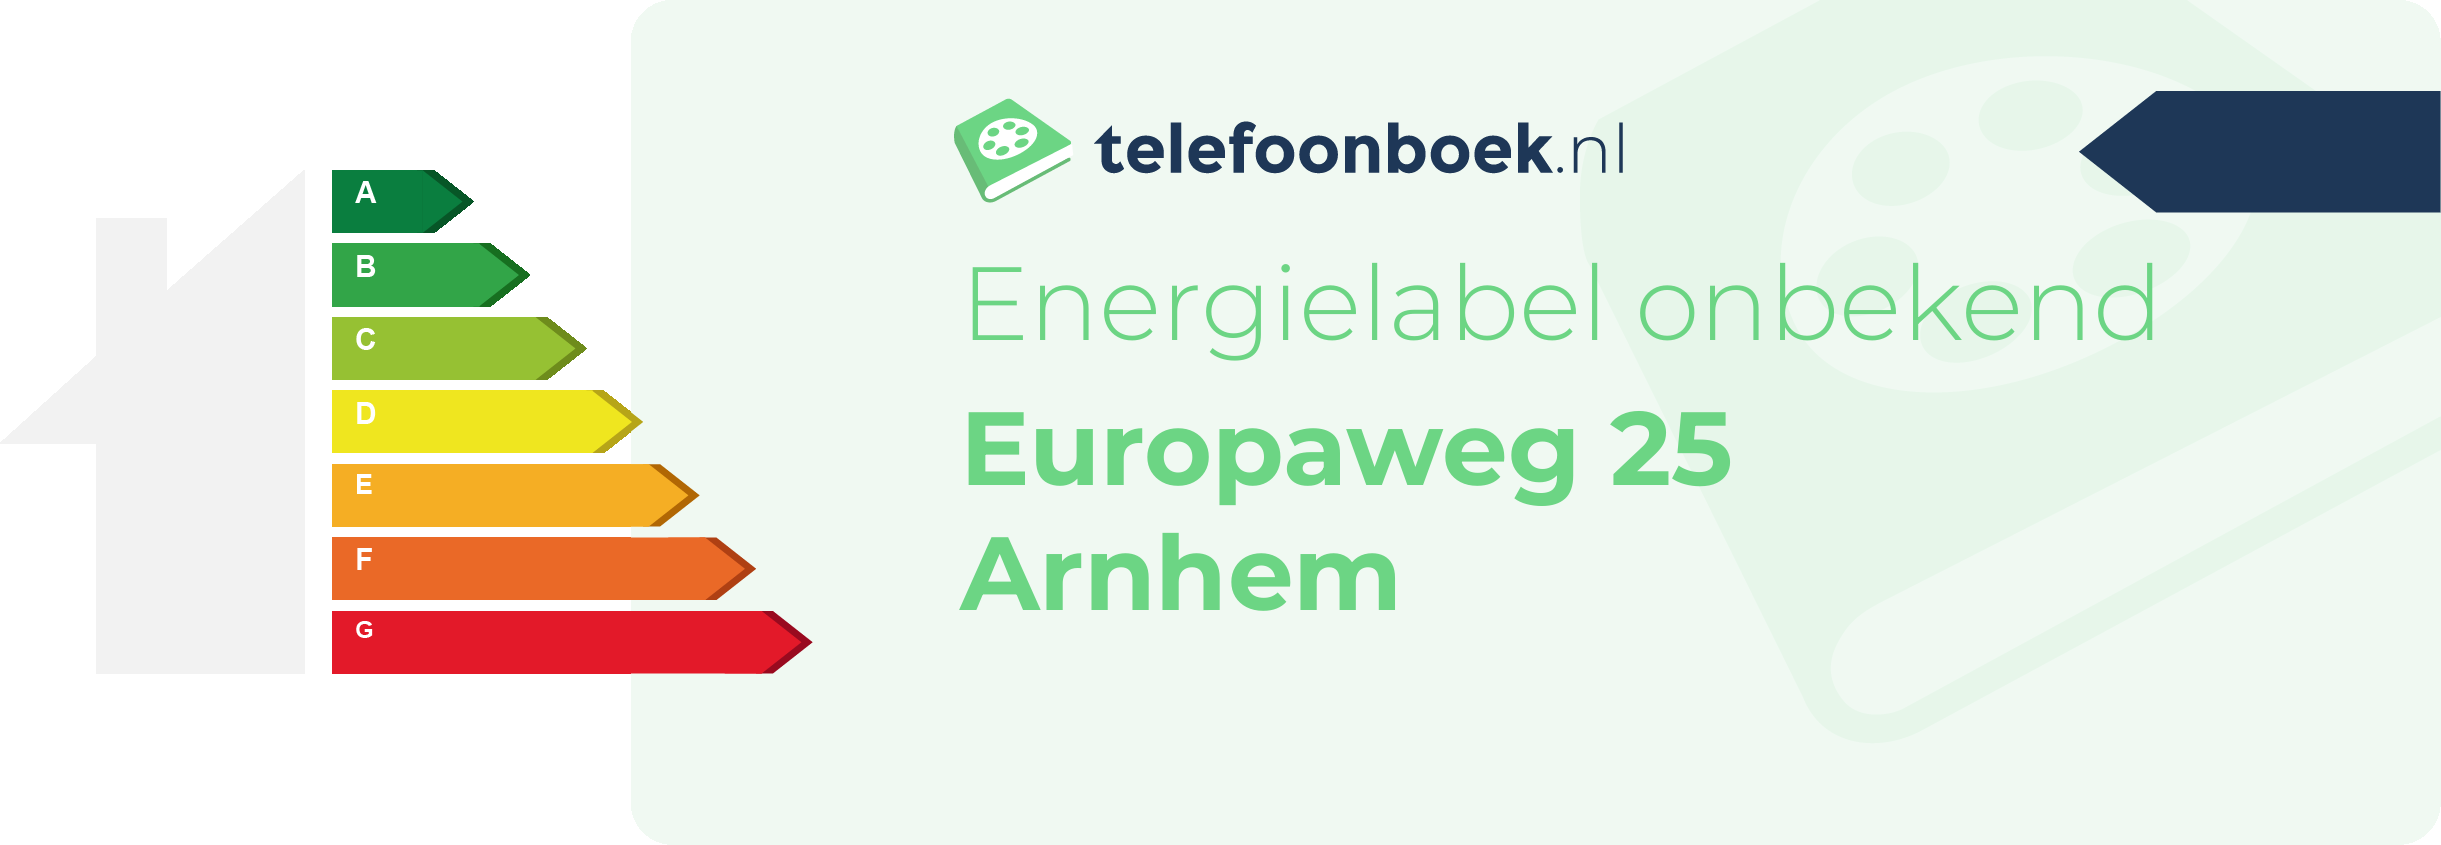 Energielabel Europaweg 25 Arnhem